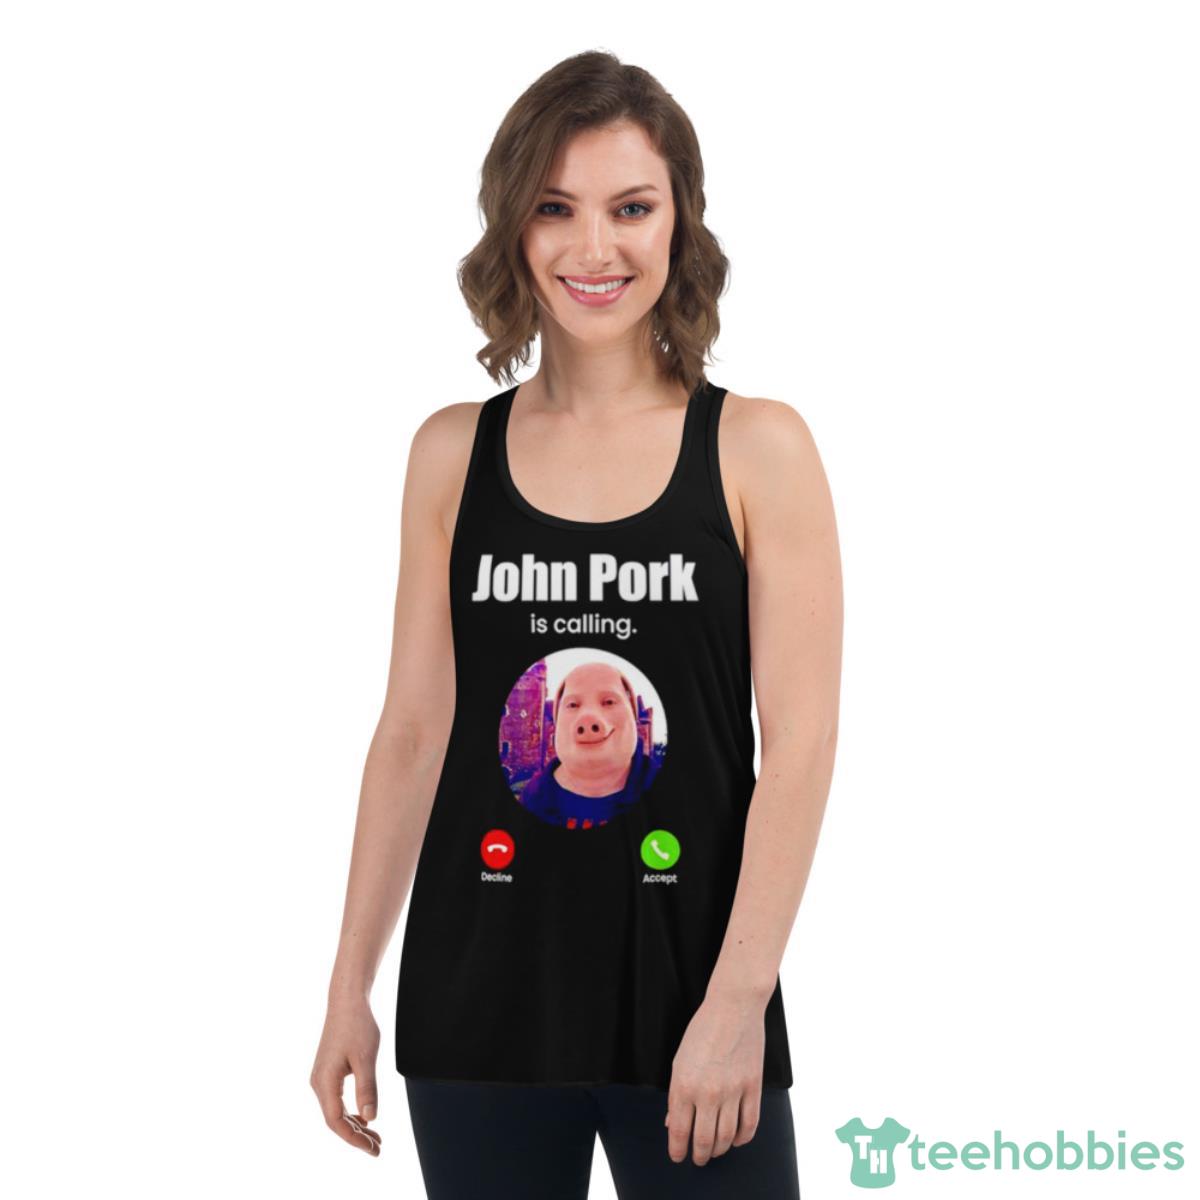 John Pork Is Calling Funny Shirt, Meme Answer Call Phone Shirt